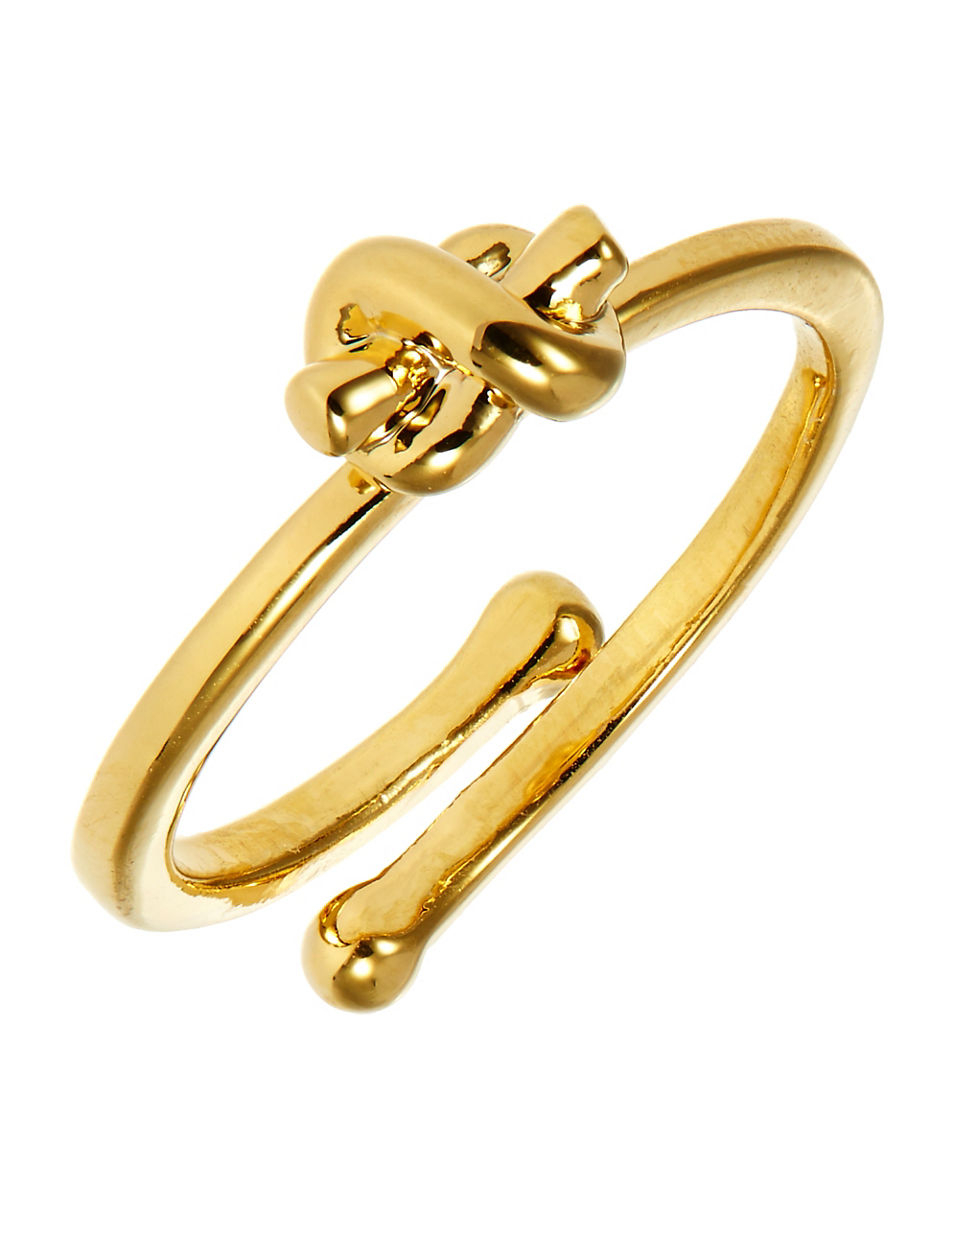 Lyst - Kate Spade New York Knot Adjustable Ring in Metallic